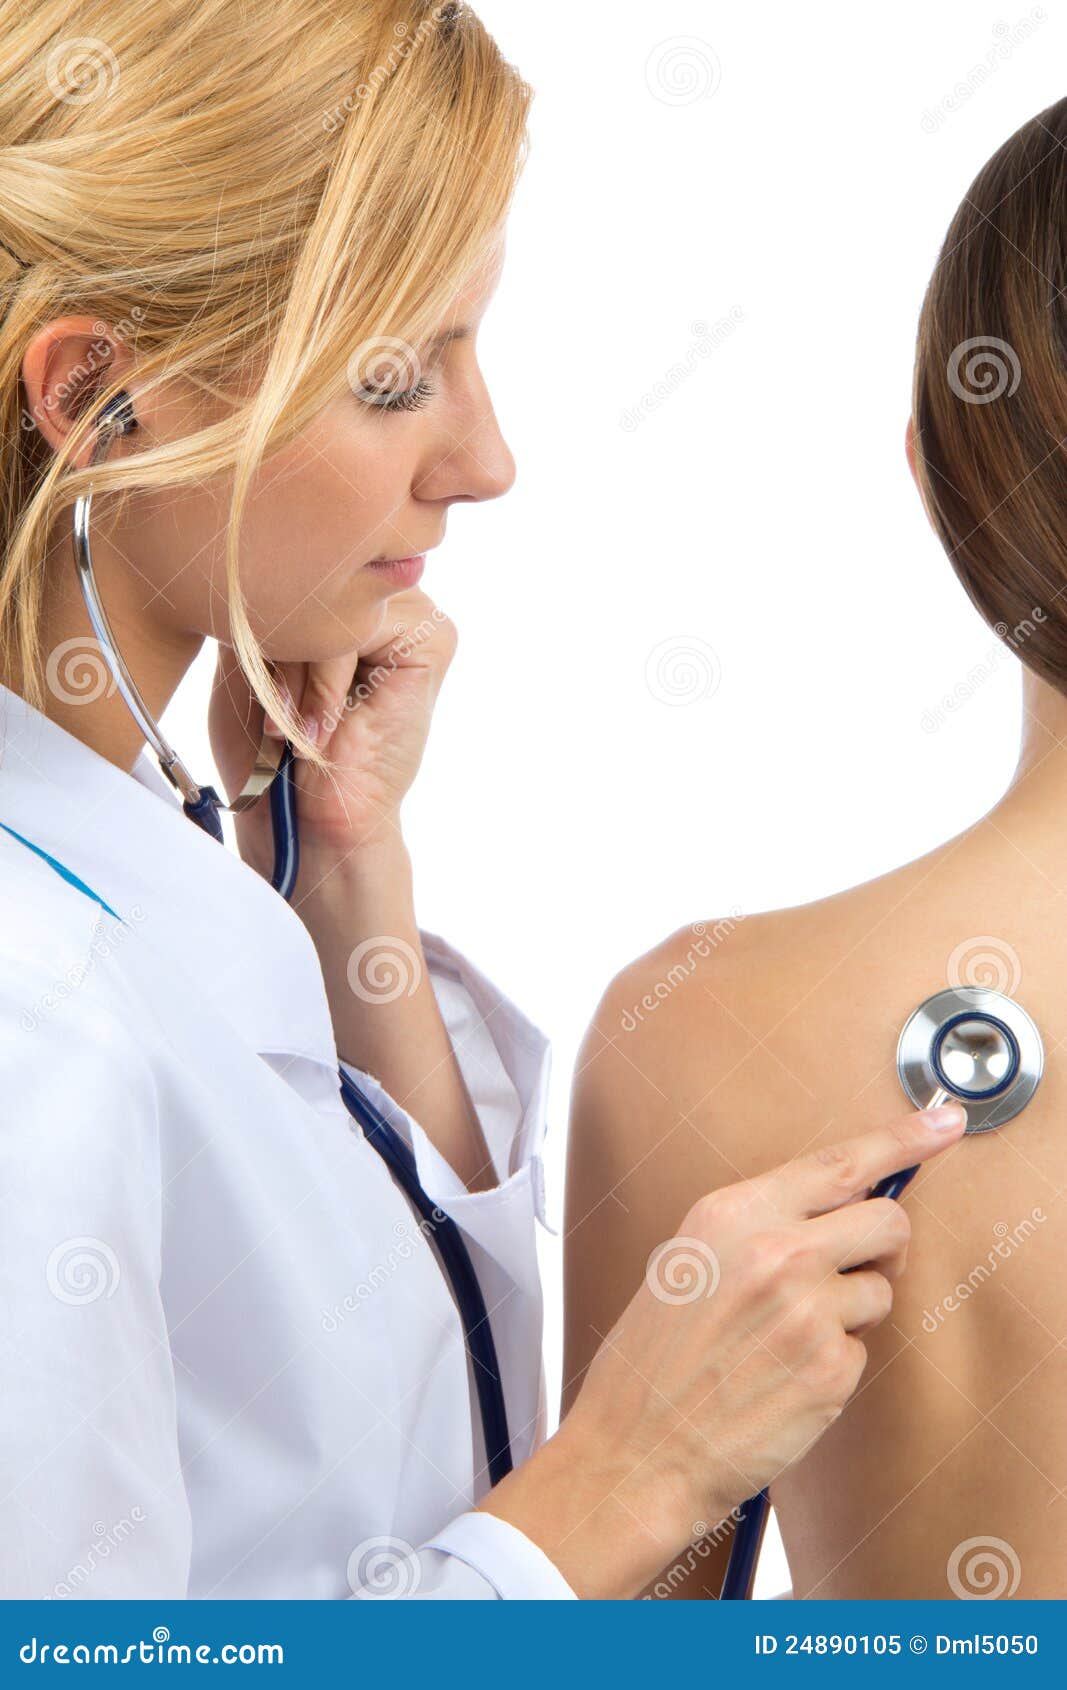 doctor-auscultating-patient-stethoscope-24890105.jpg